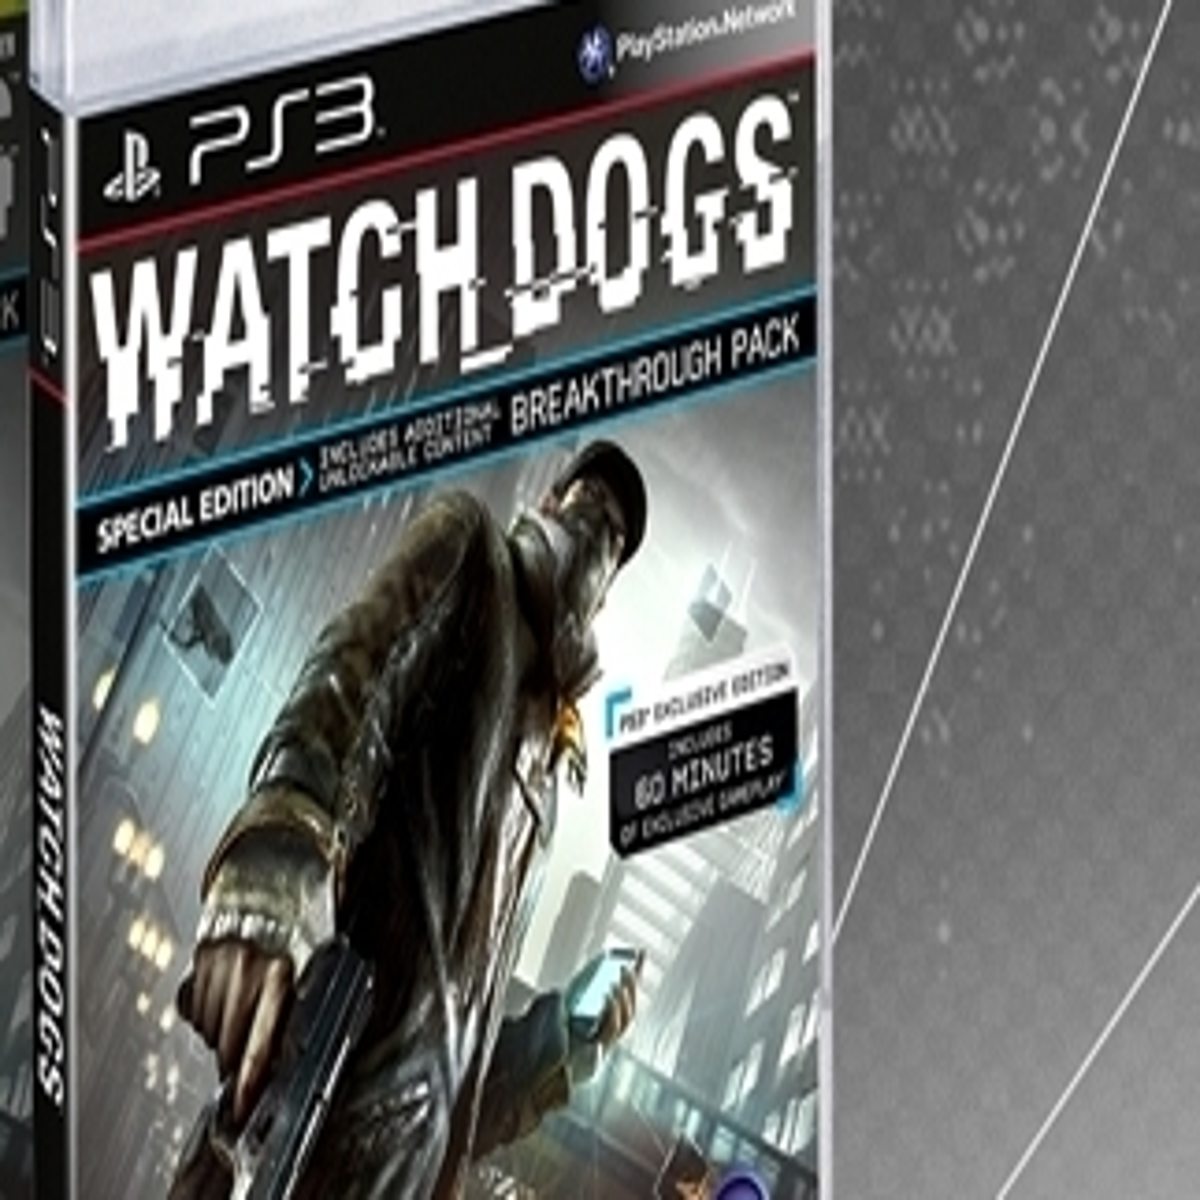 watch dogs ps3 psn midia digital - MSQ Games